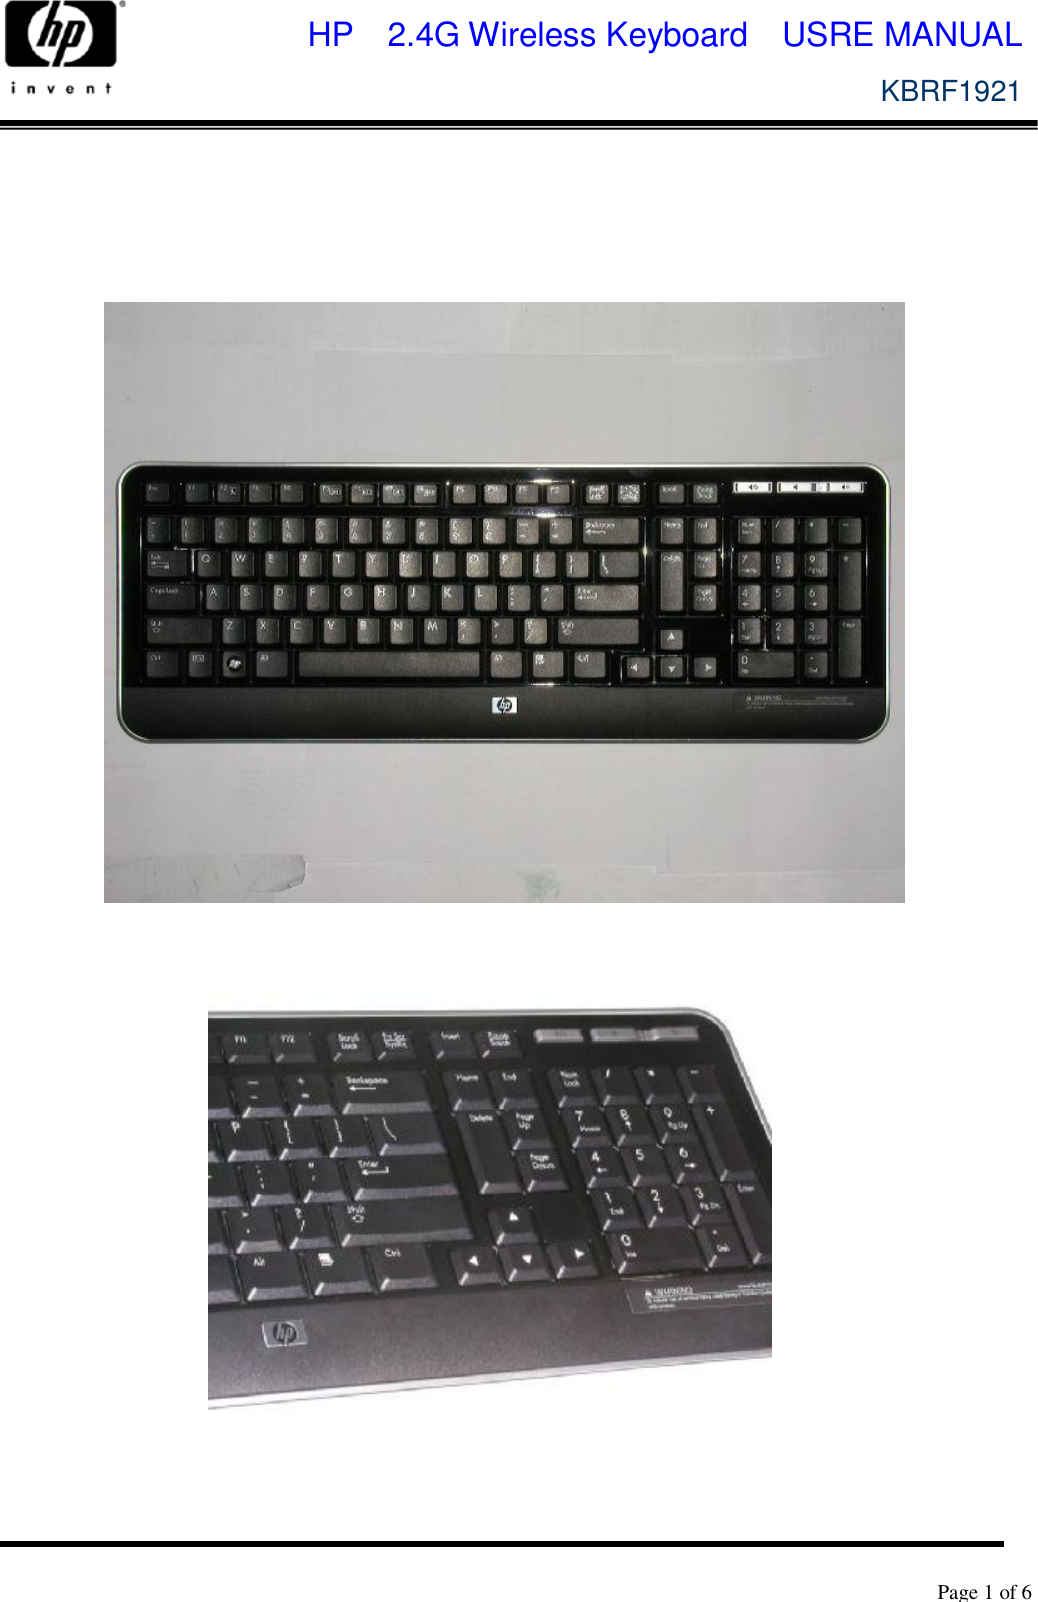   Page 1 of 6              HP  2.4G Wireless Keyboard  USRE MANUAL KBRF1921       